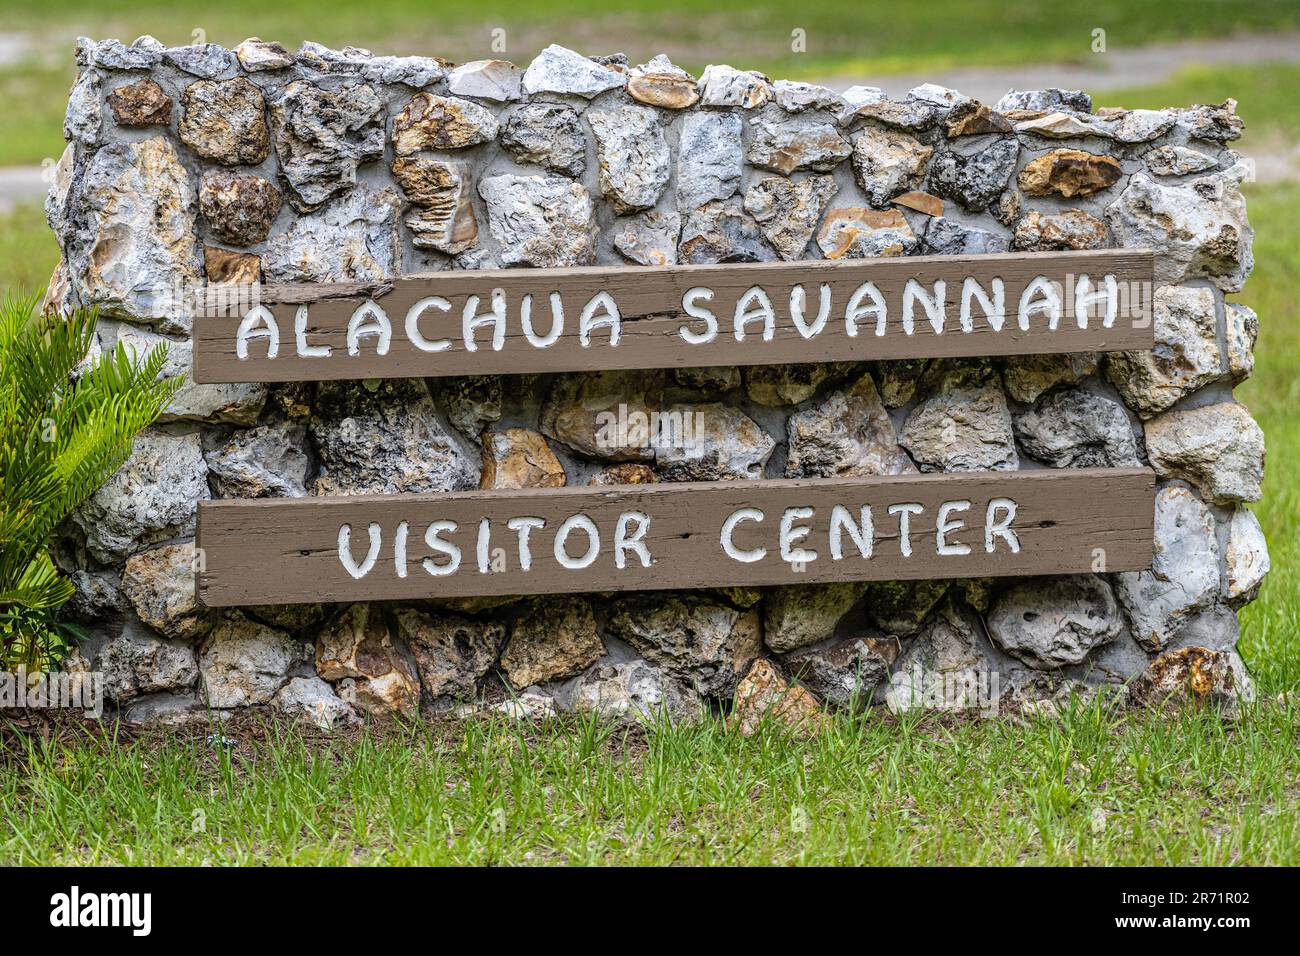 Cartello d'ingresso per l'Alachua Savannah Visitor Center presso il Paynes Prairie Preserve state Park di Micanopy, Florida. (USA) Foto Stock